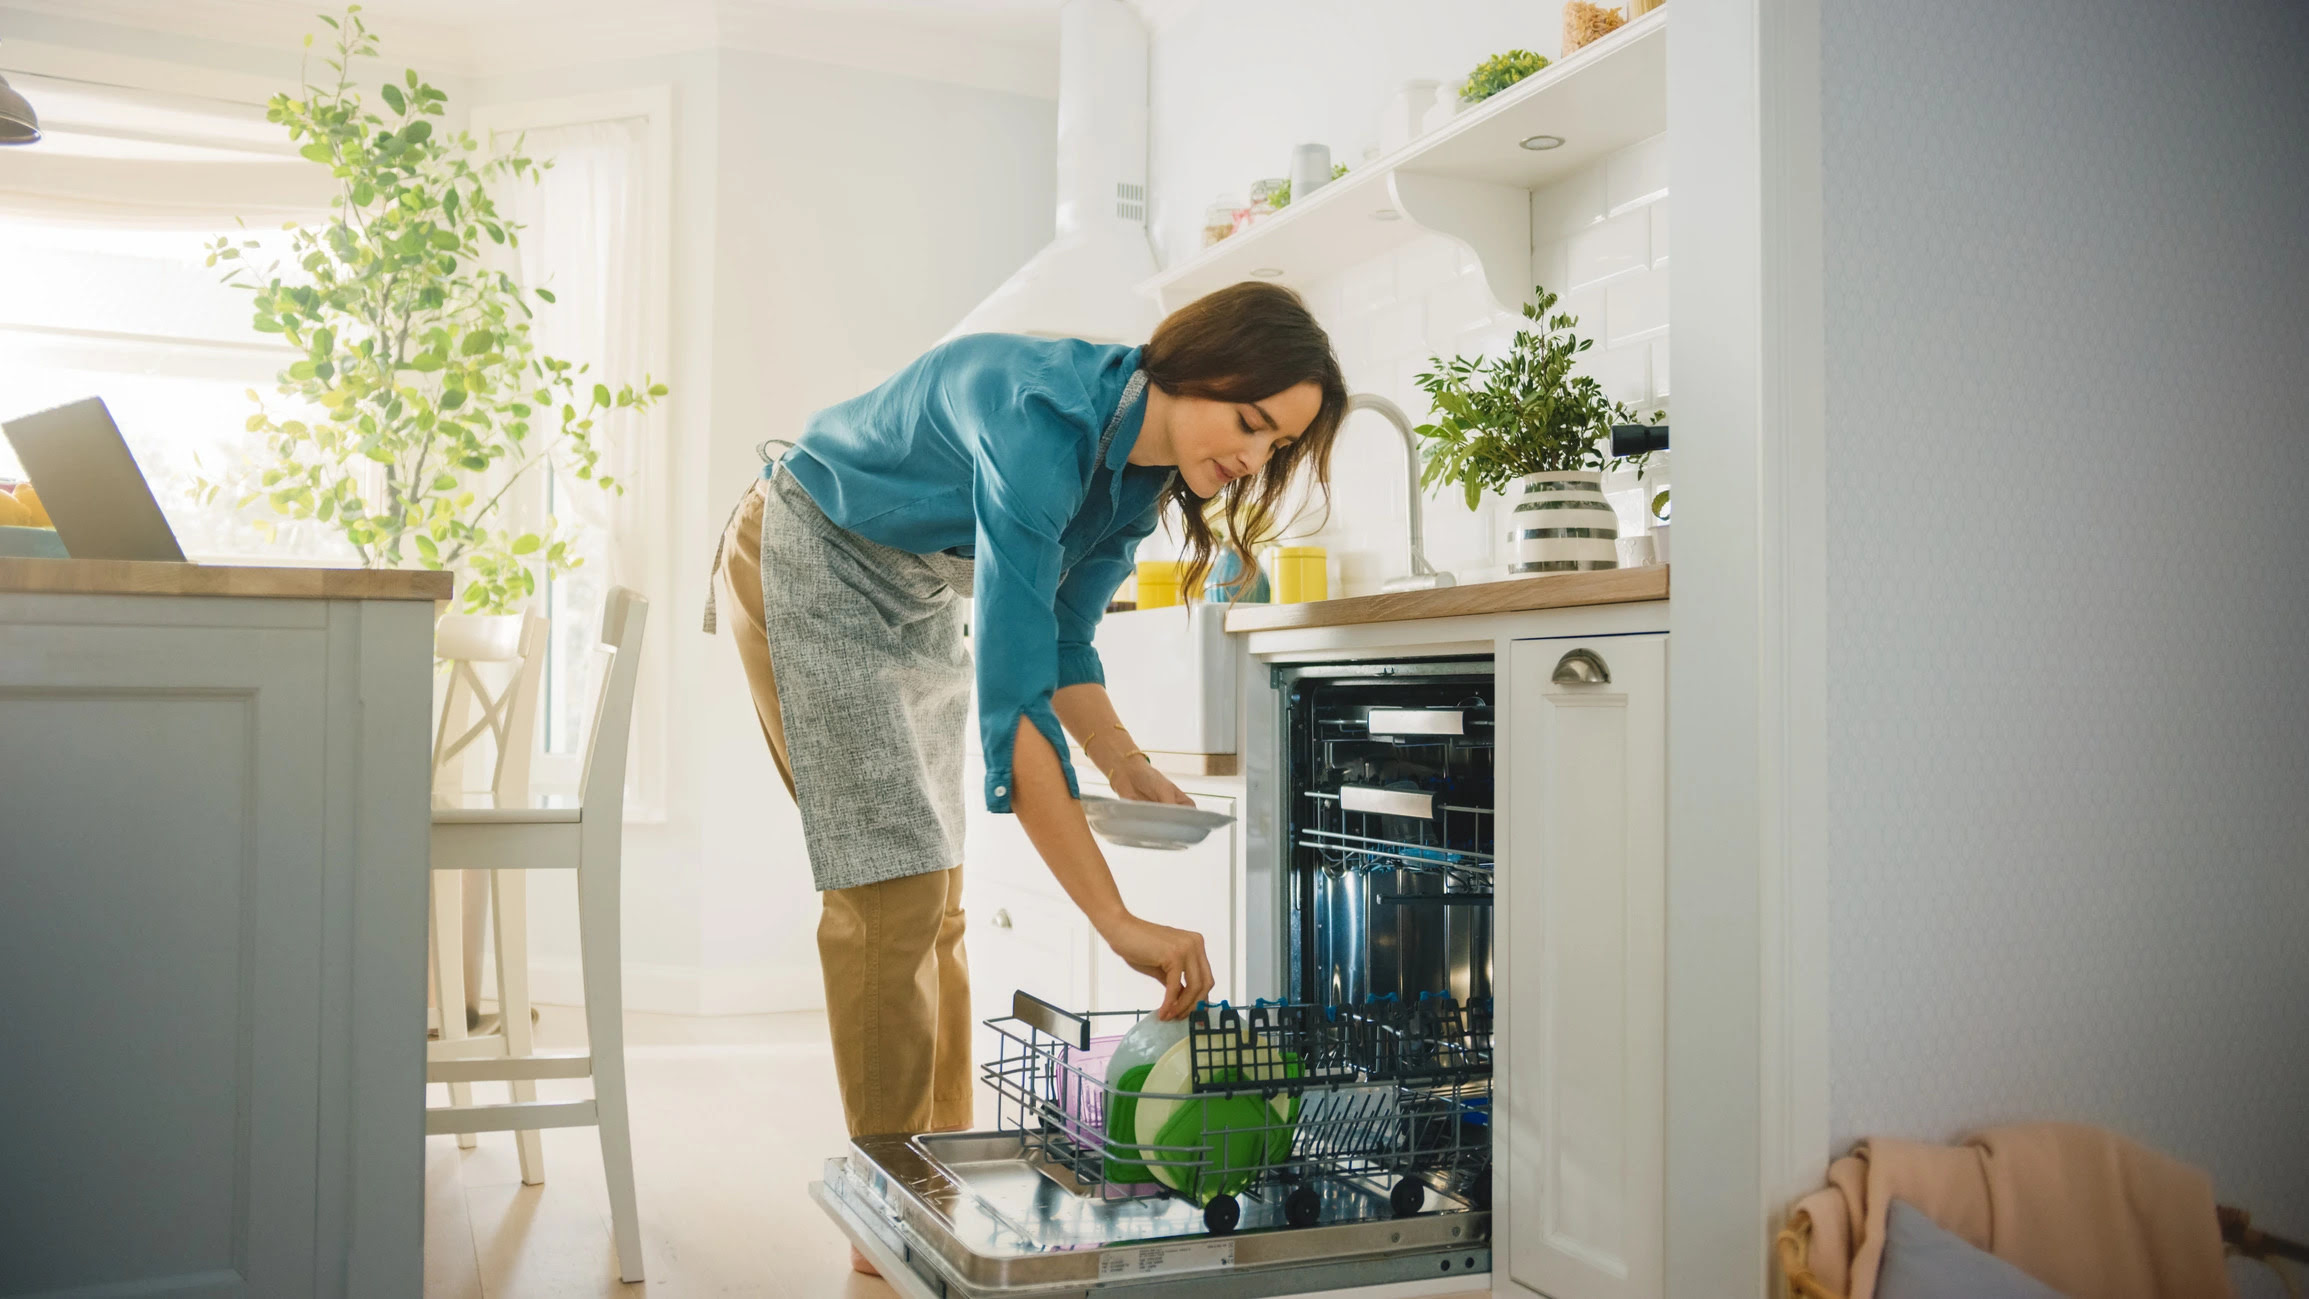 Standard Dishwasher Sizes Guide